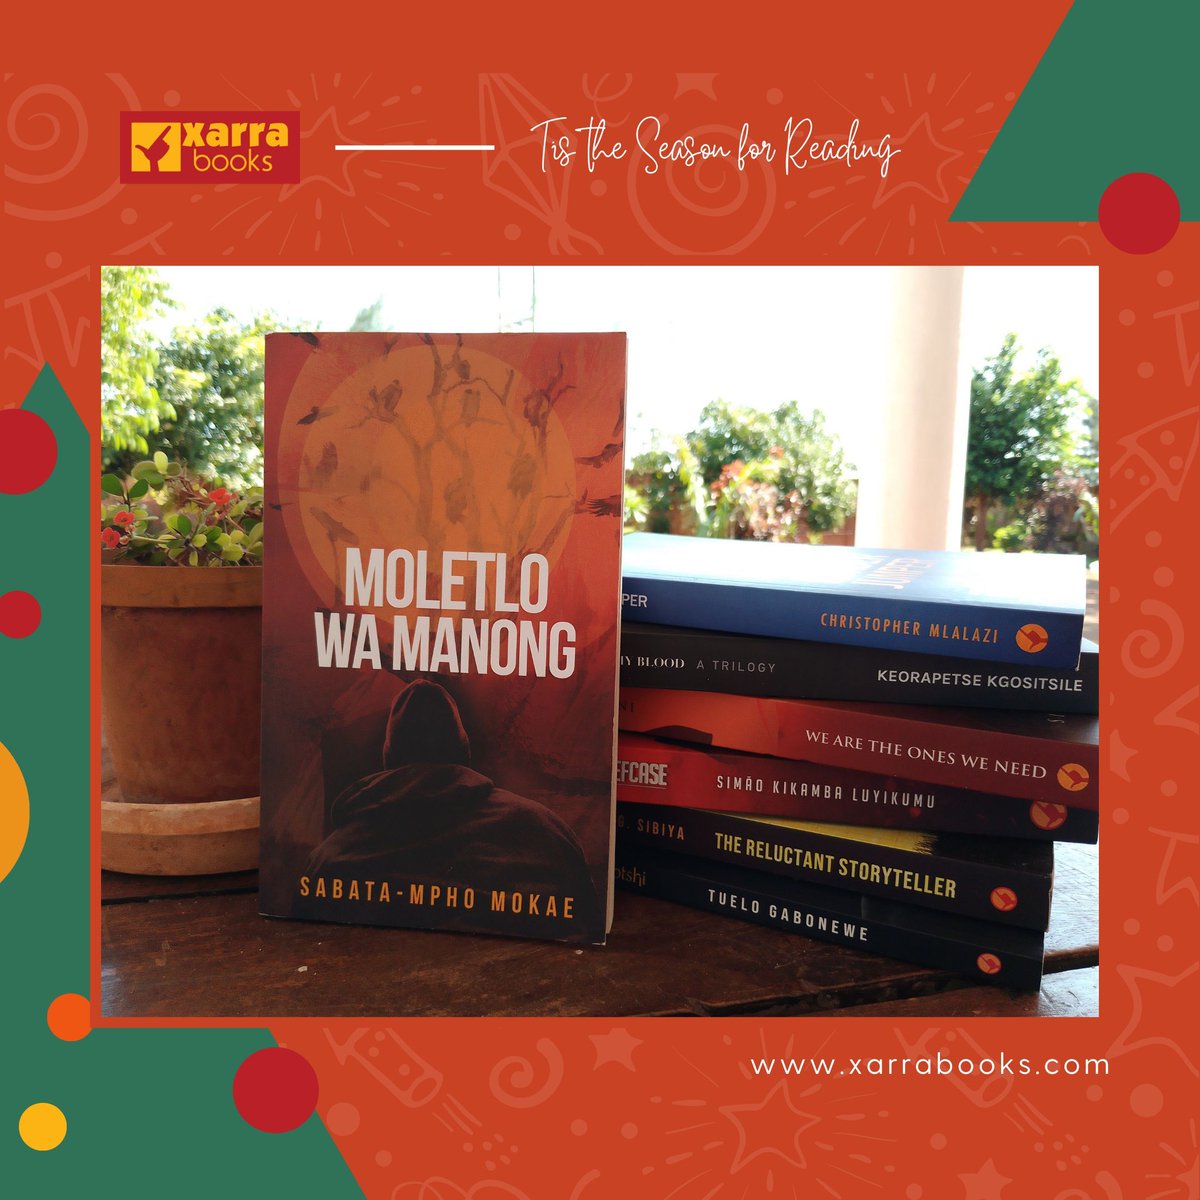 Immerse yourself in the rich world of Setswana literature this holiday with Sabata-mpho Mokae's Moletlo wa Manong. A captivating read that you won't want to put down. #HolidayRead #SetswanaLit
@mokaewriter @kmguni